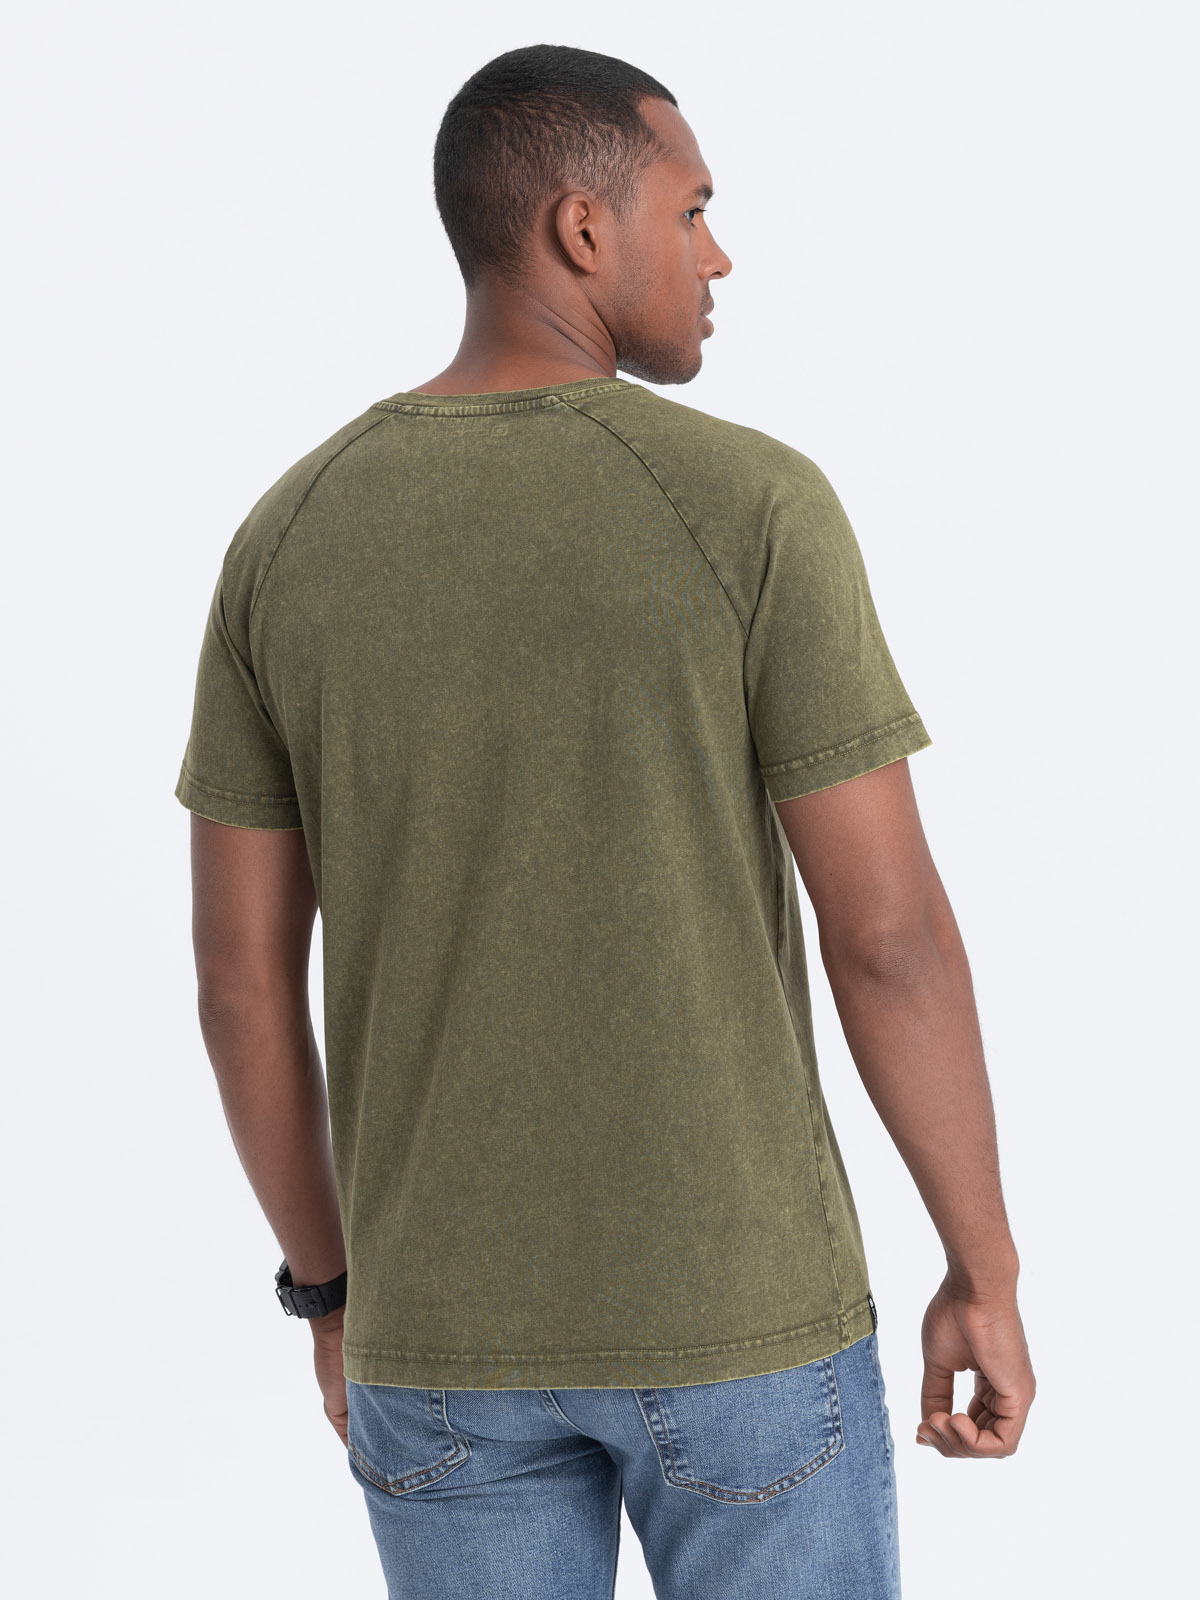 Men's T-shirt with henley neckline - dark olive V4 S1757 | Ombre.com -  Men's clothing online